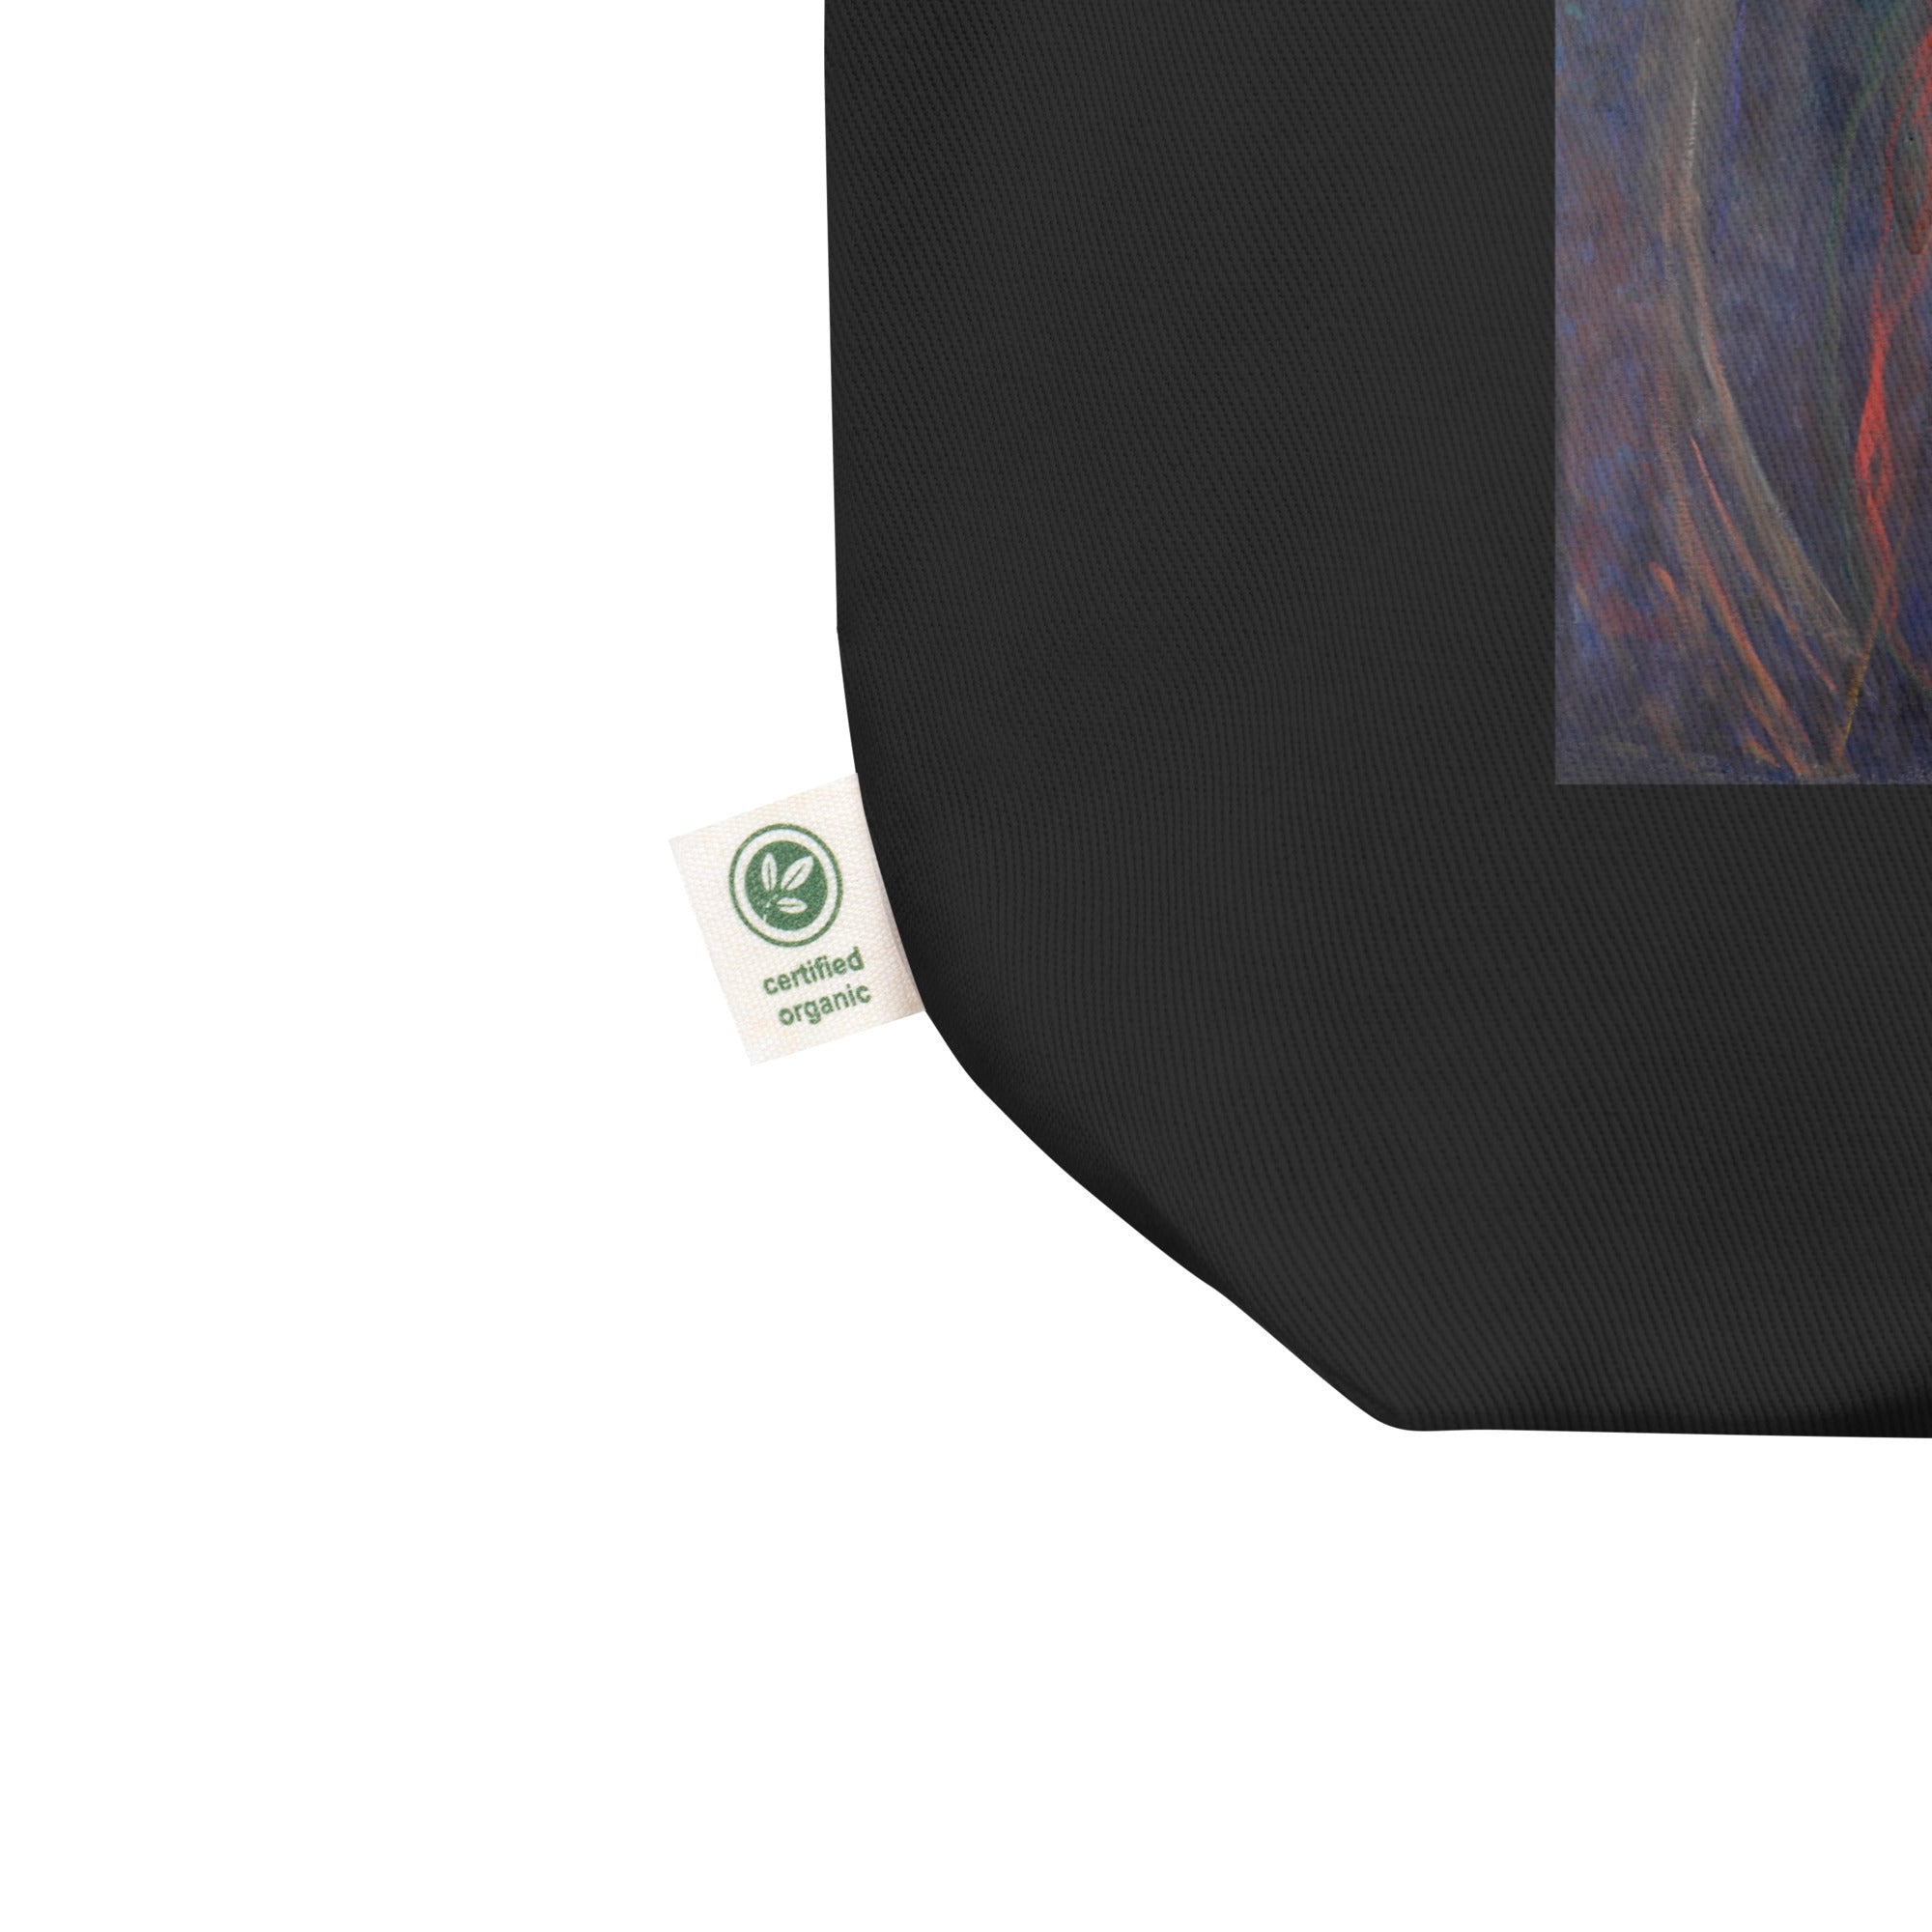 Edvard Munch 'Vampire' Famous Painting Totebag | Eco Friendly Art Tote Bag